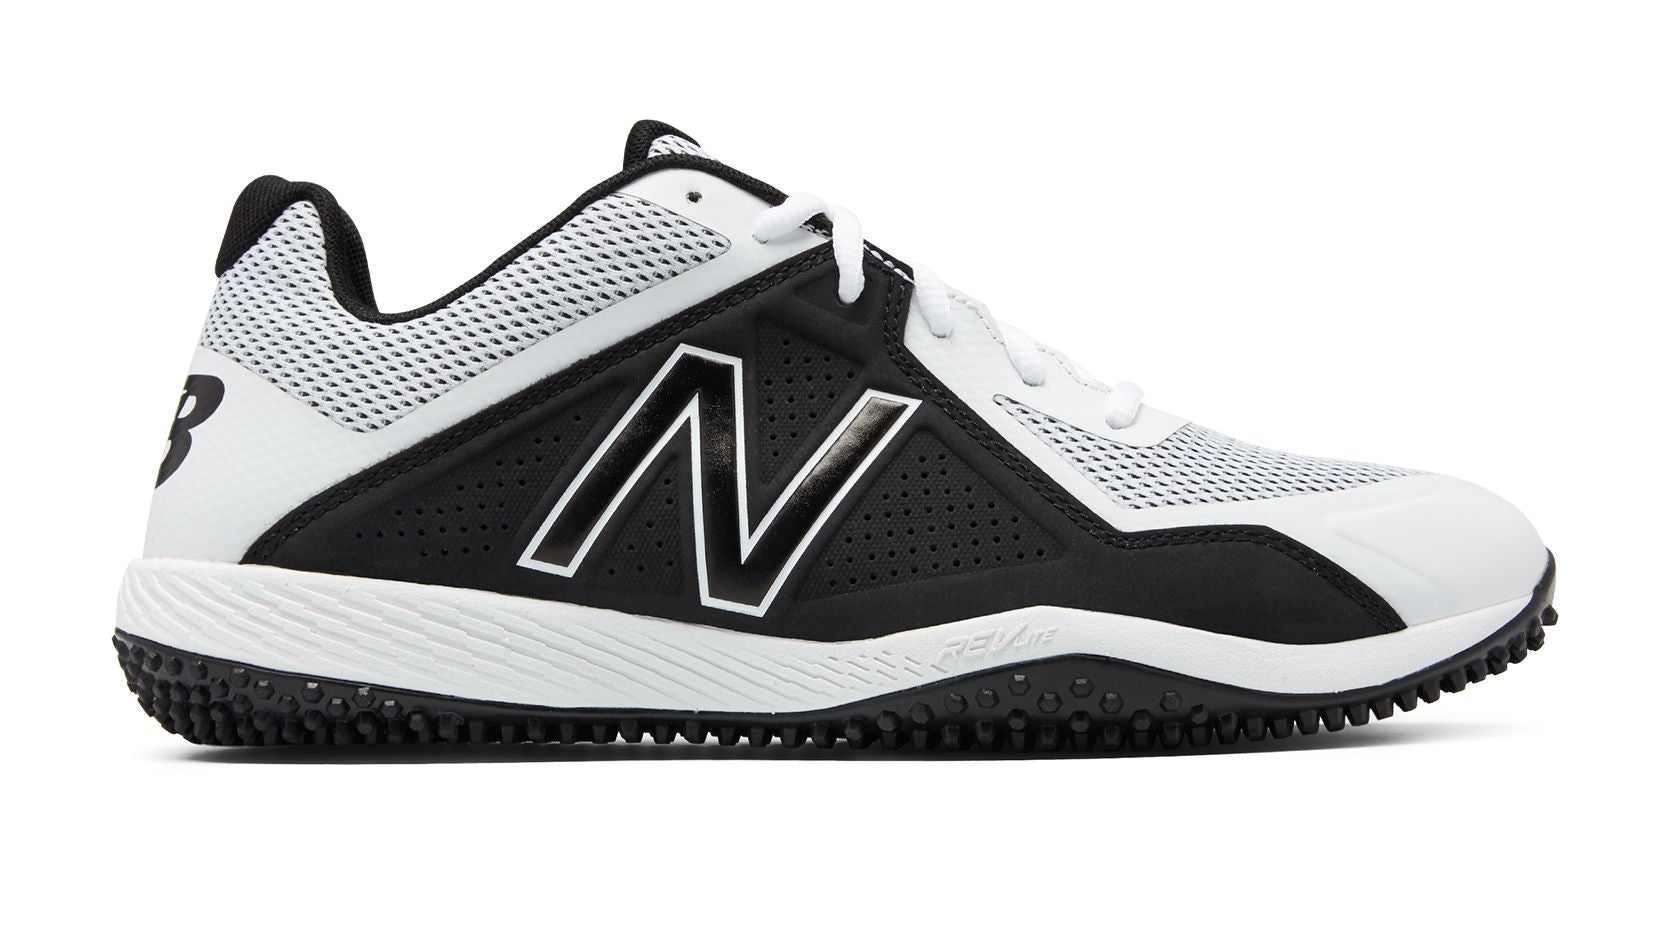 New Balance - White/Black 4040v4 Baseball Turf Shoes (T4040WB4)